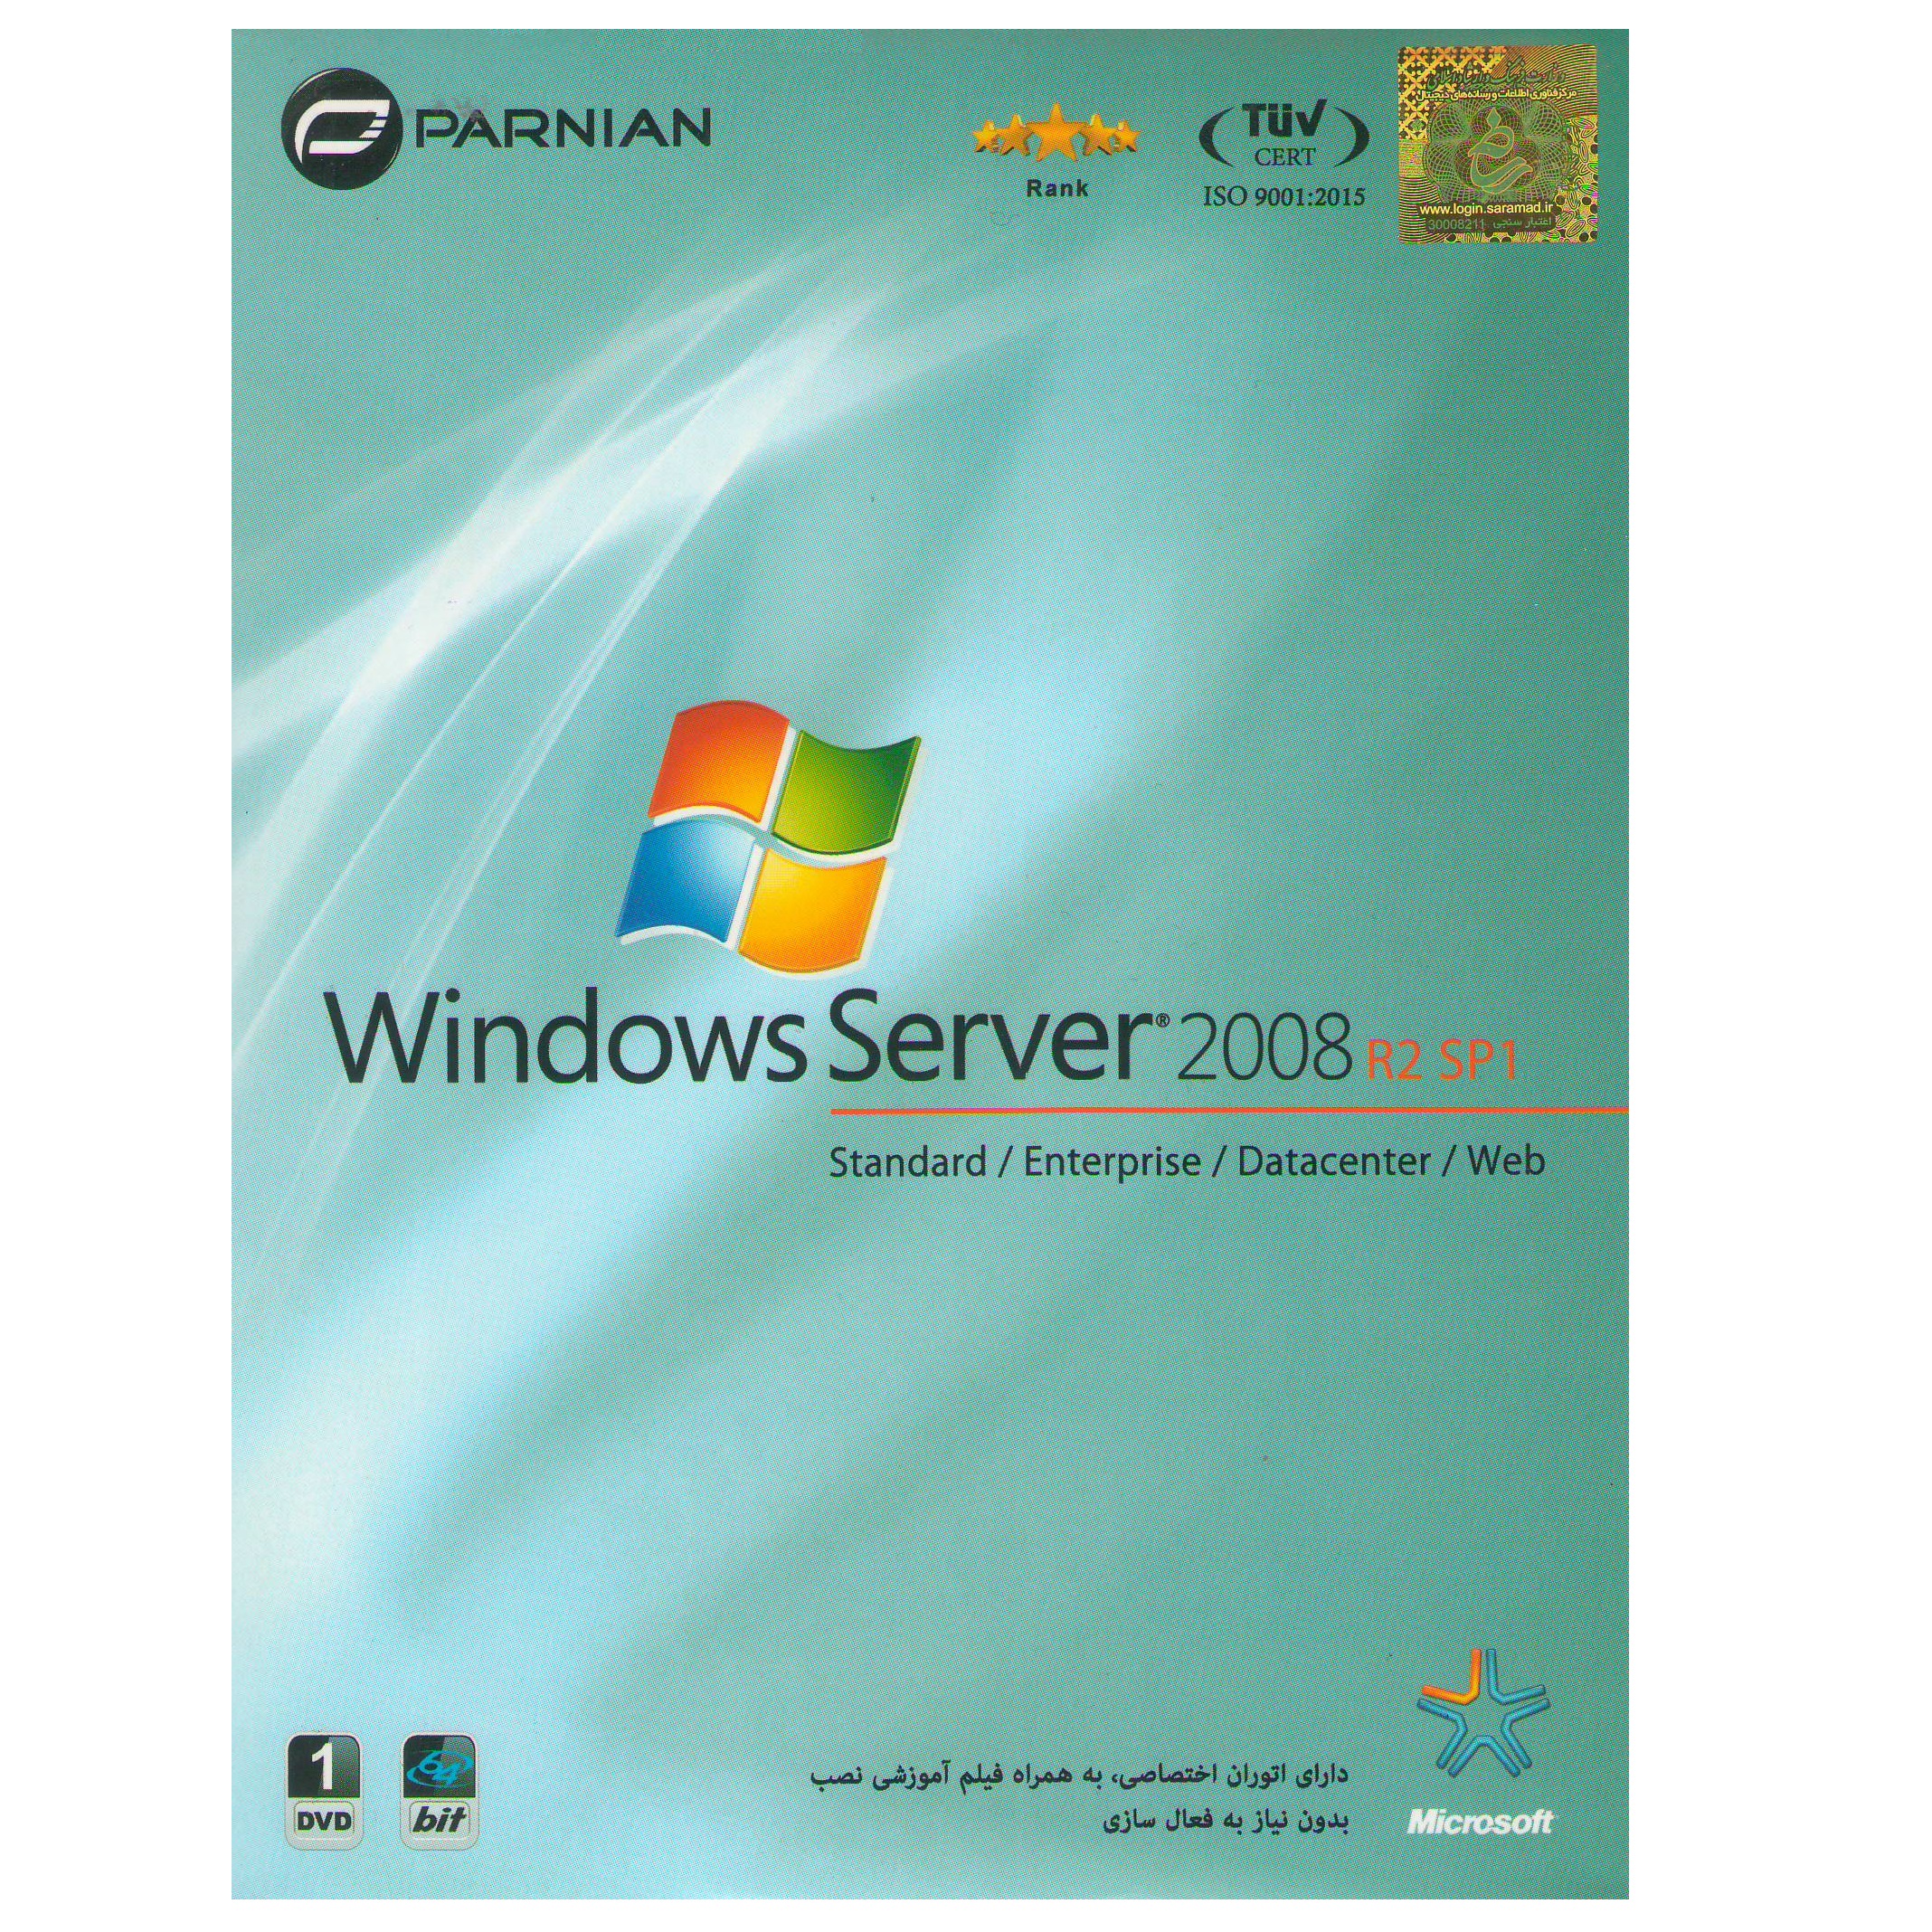 سیستم عامل ویندوز سرور 2008 نسخهR2 SP1 نشر پرنیان